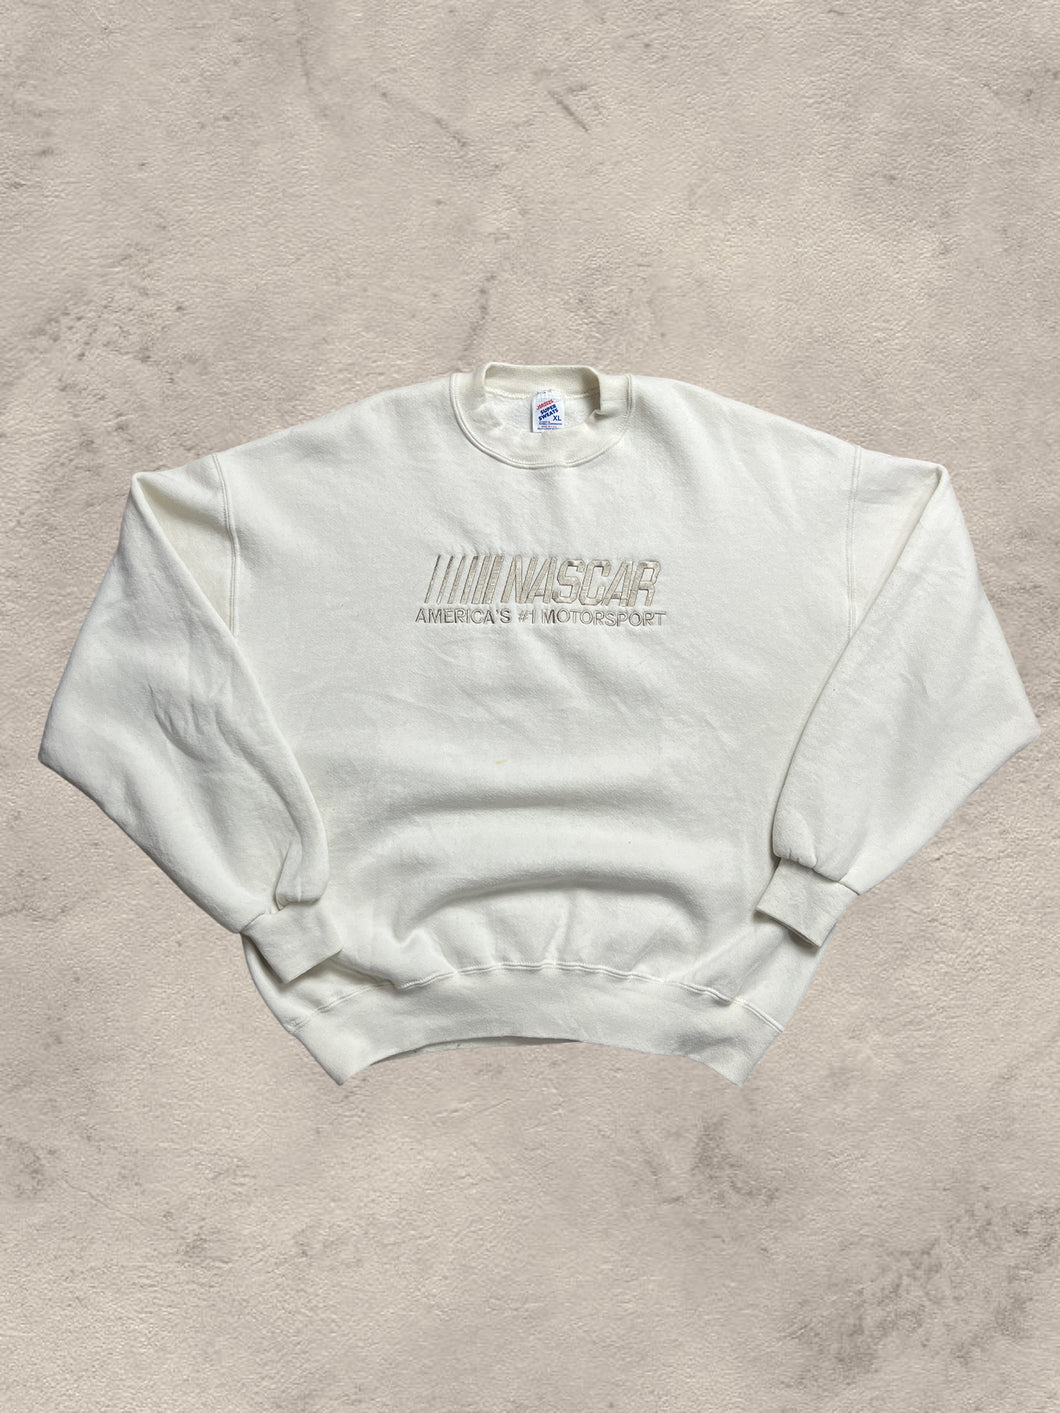 1990’s Nascar Sweatshirt - XL